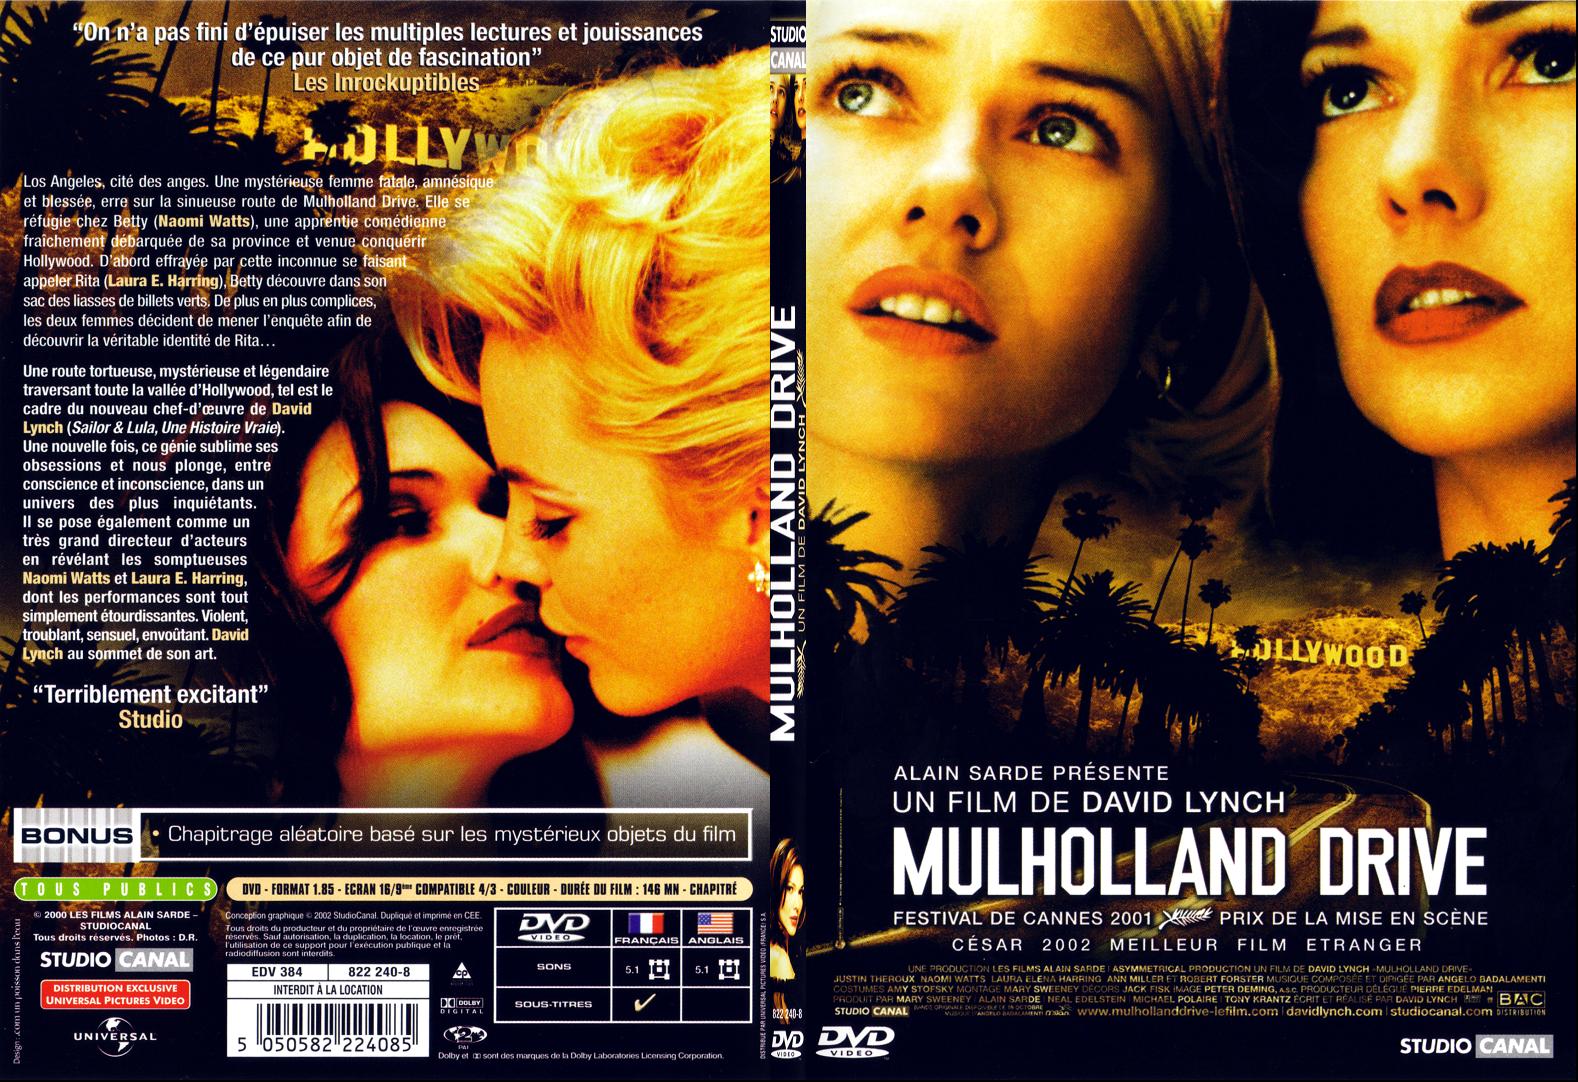 Jaquette DVD Mulholland drive - SLIM